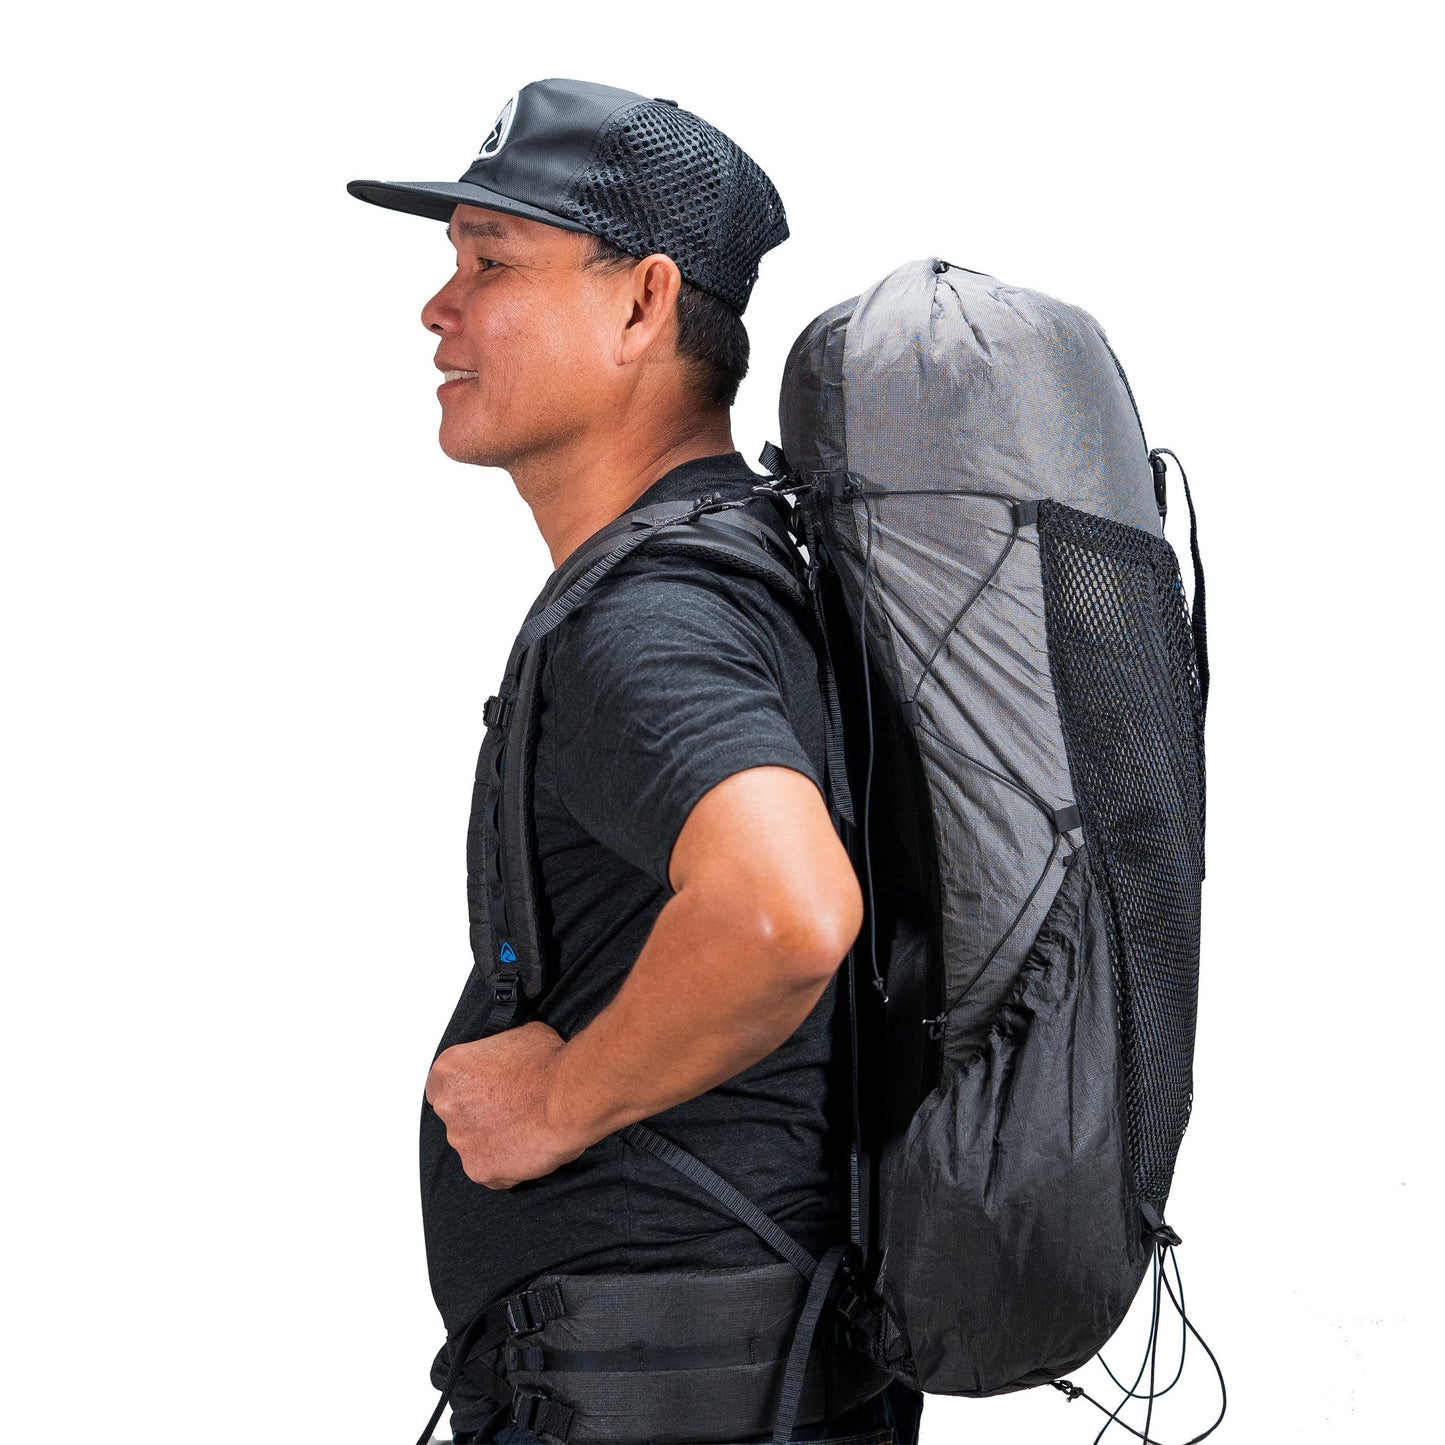 Zpacks - Arc Haul Ultra 40L Backpack